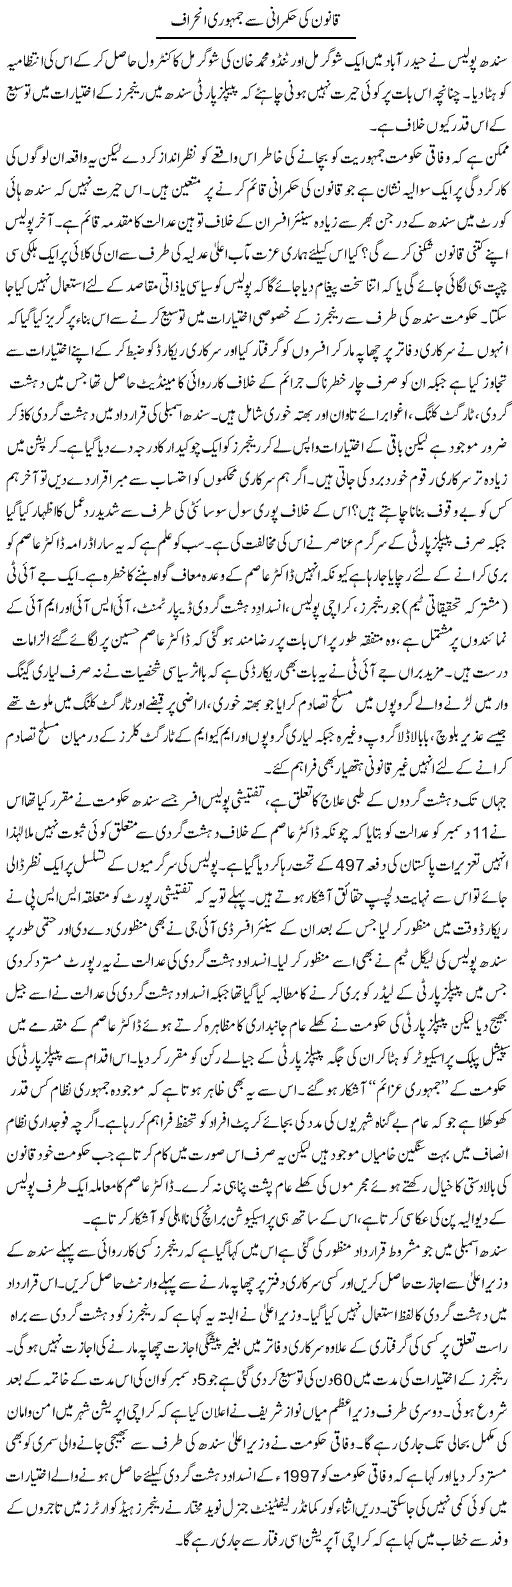 Qanoon Ki Hukmarani Se Jamhuri Inhiraf | Ikram Sehgal | Daily Urdu Columns